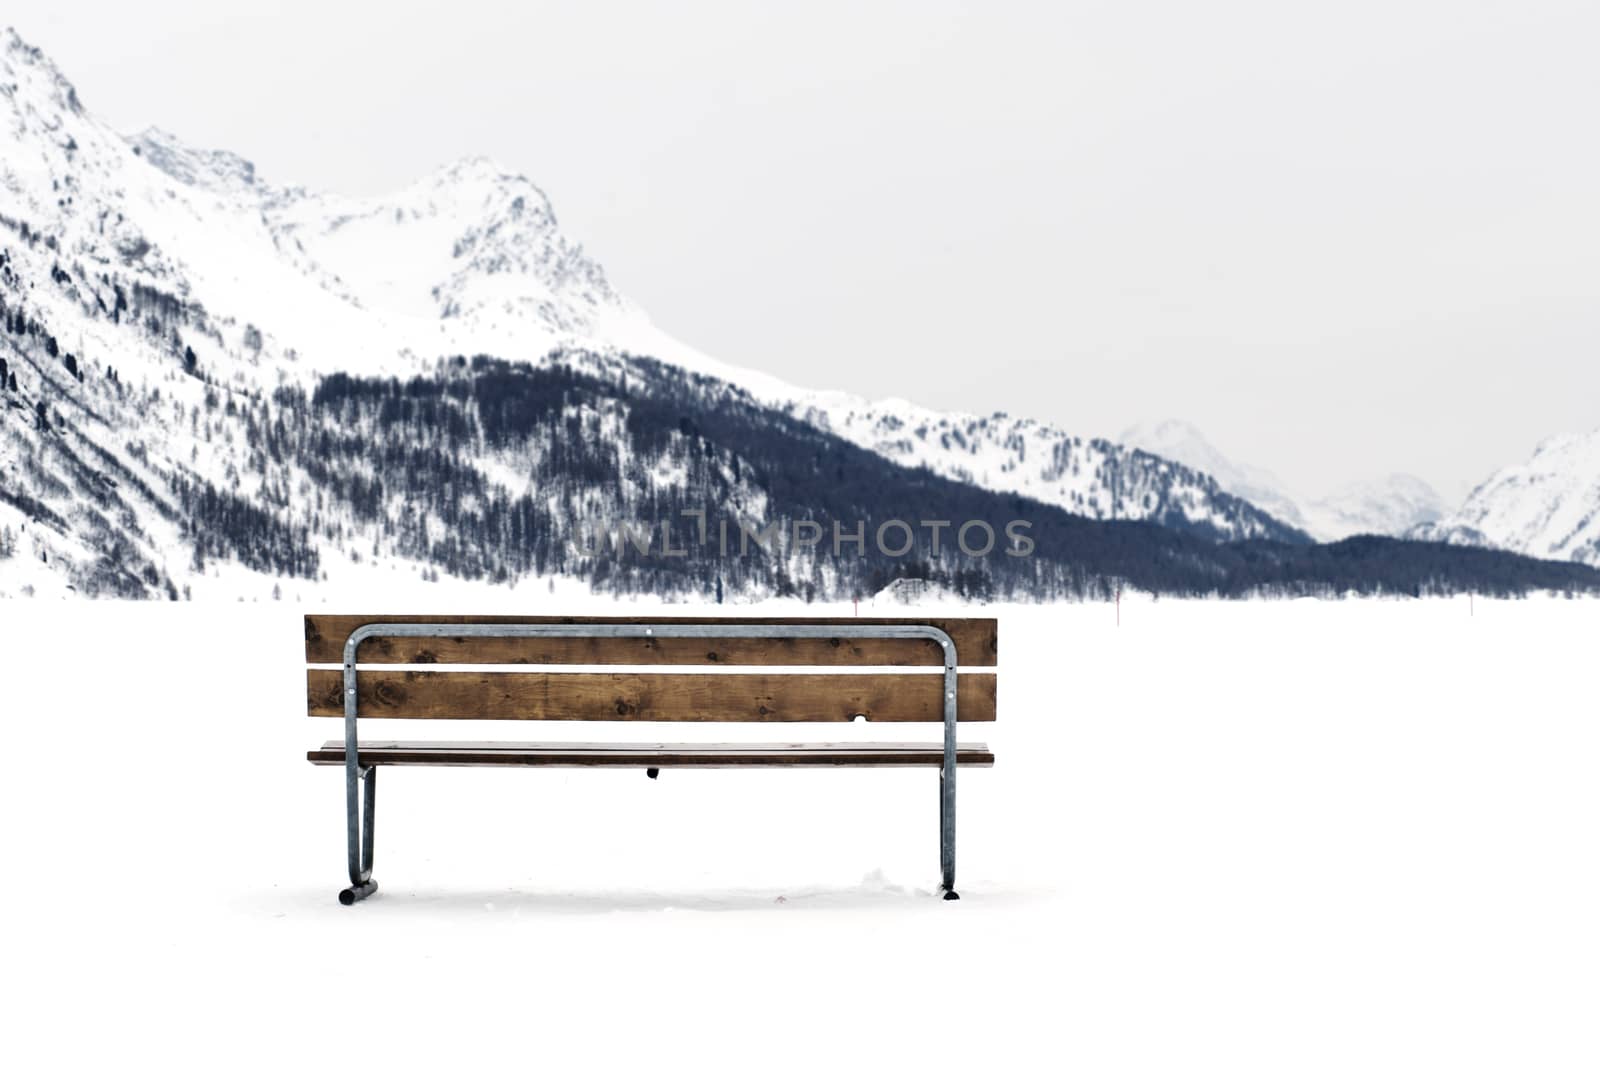 Wooden bench on a snowy winter landscape